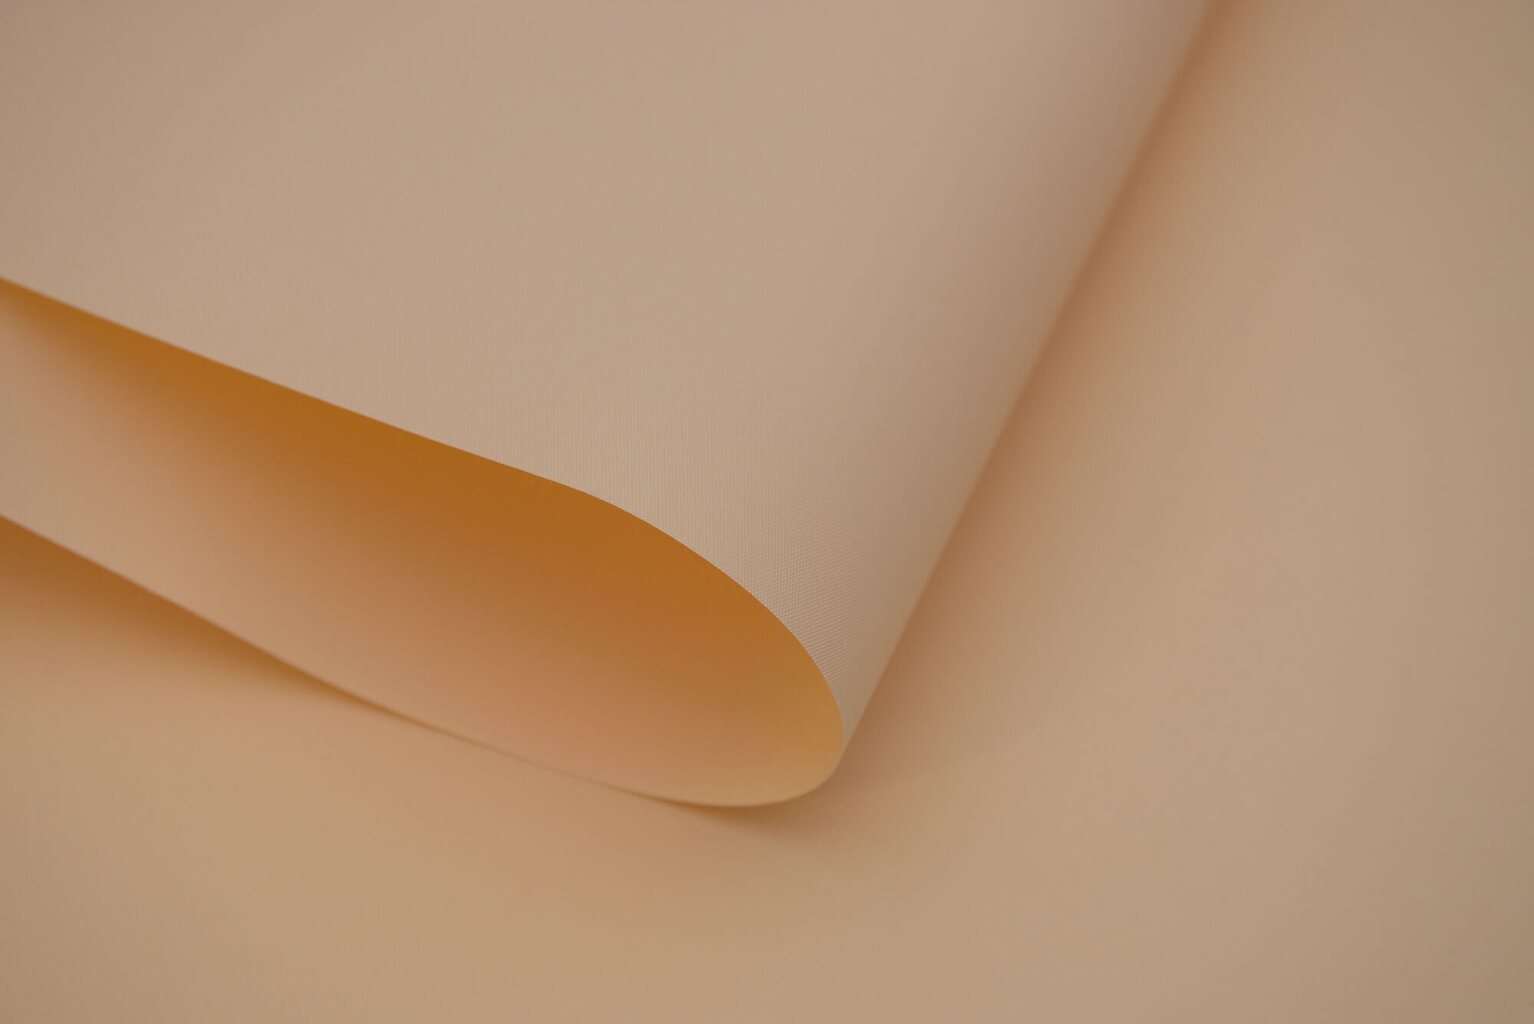 Sieninis roletas su audiniu Dekor 90x240 cm, d-03 oranžinė kaina ir informacija | Roletai | pigu.lt